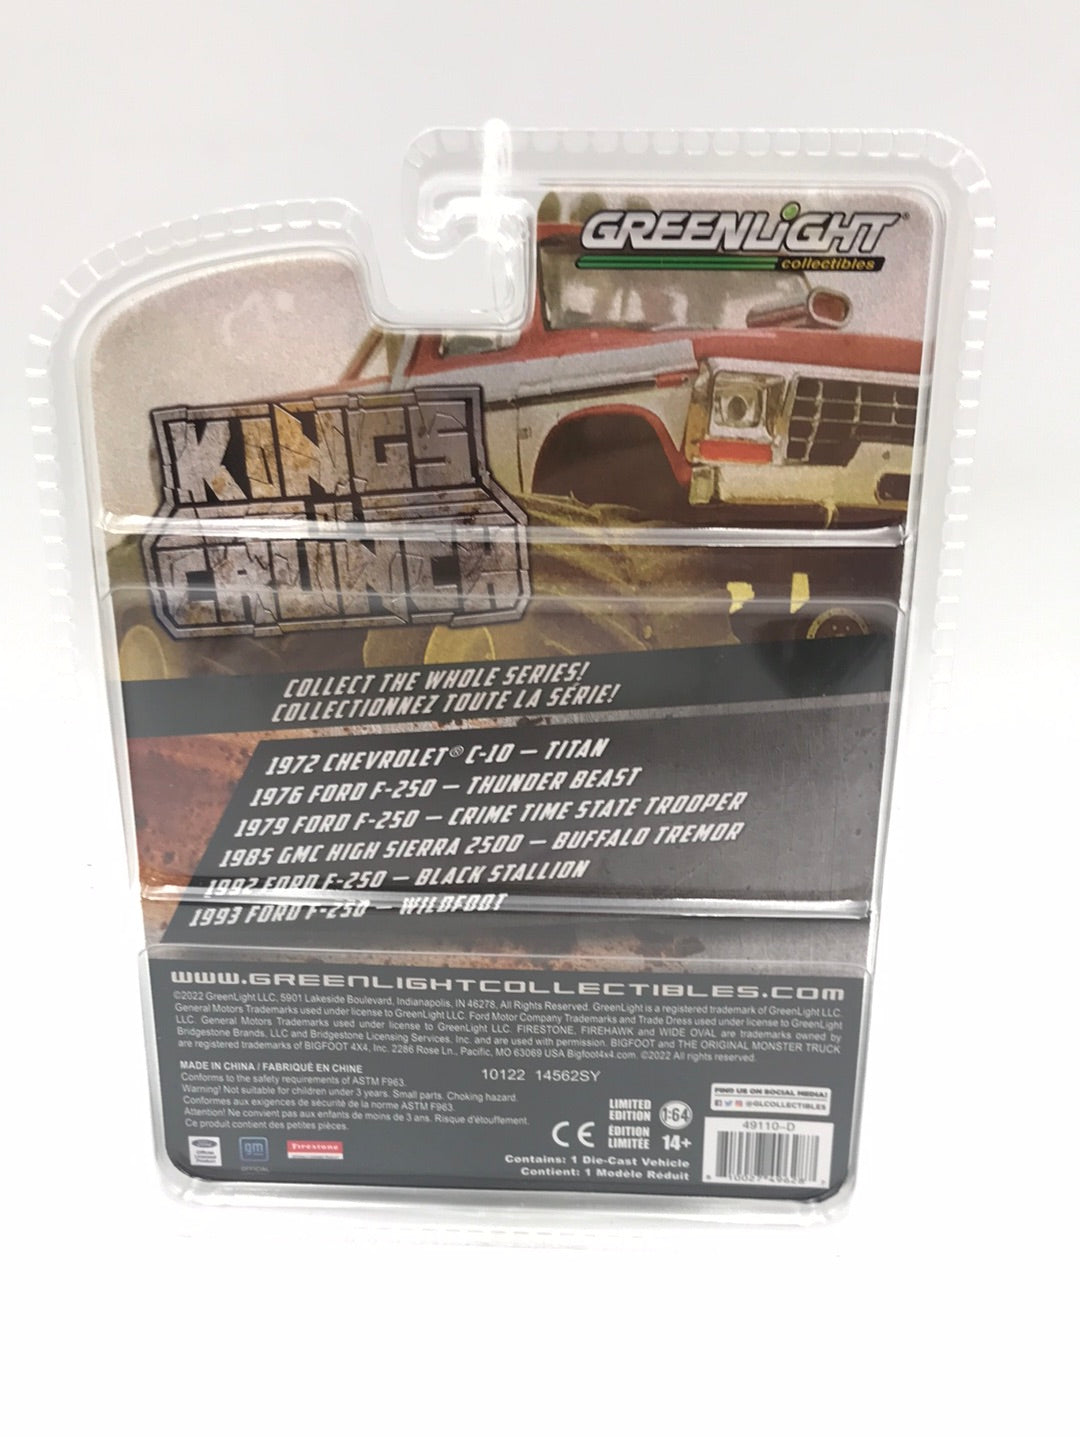 Greenlight Kings of crunch series 11 1985 GMC High Sierra 2500 greenie chase green machine VHTF